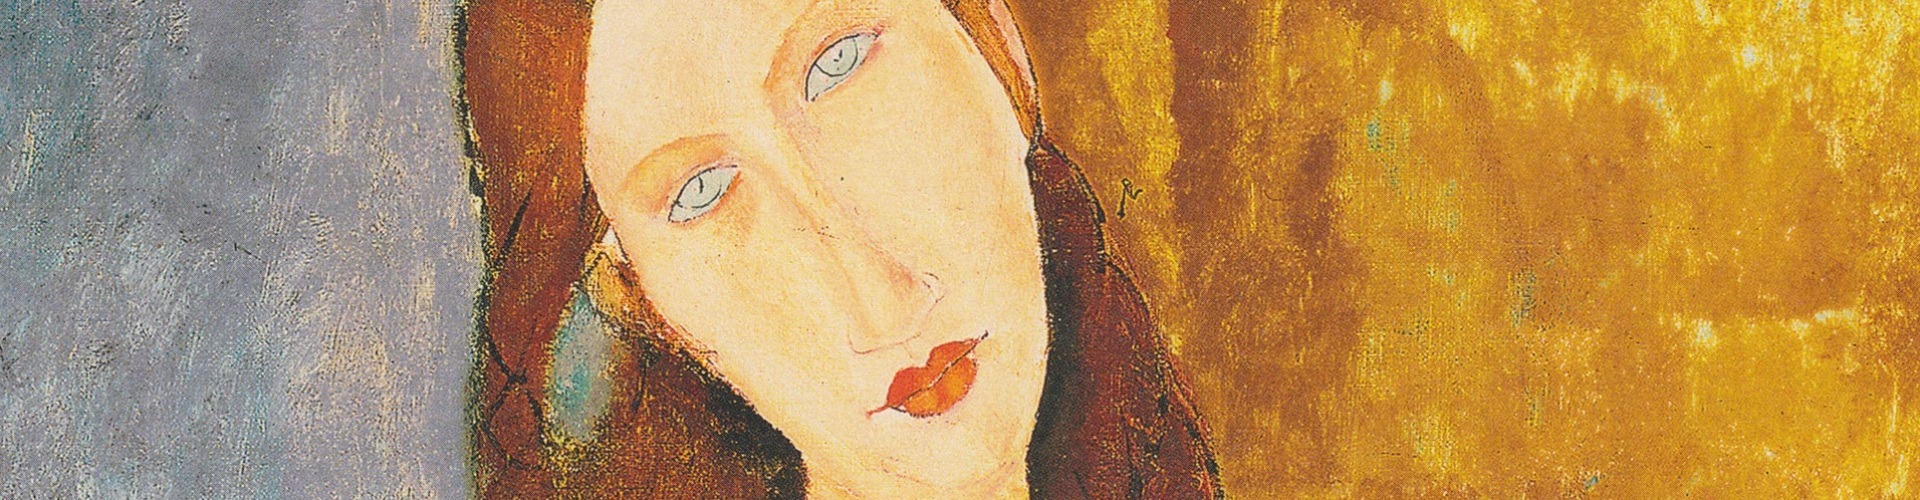 Kincseink – Amedeo Clemente Modigliani